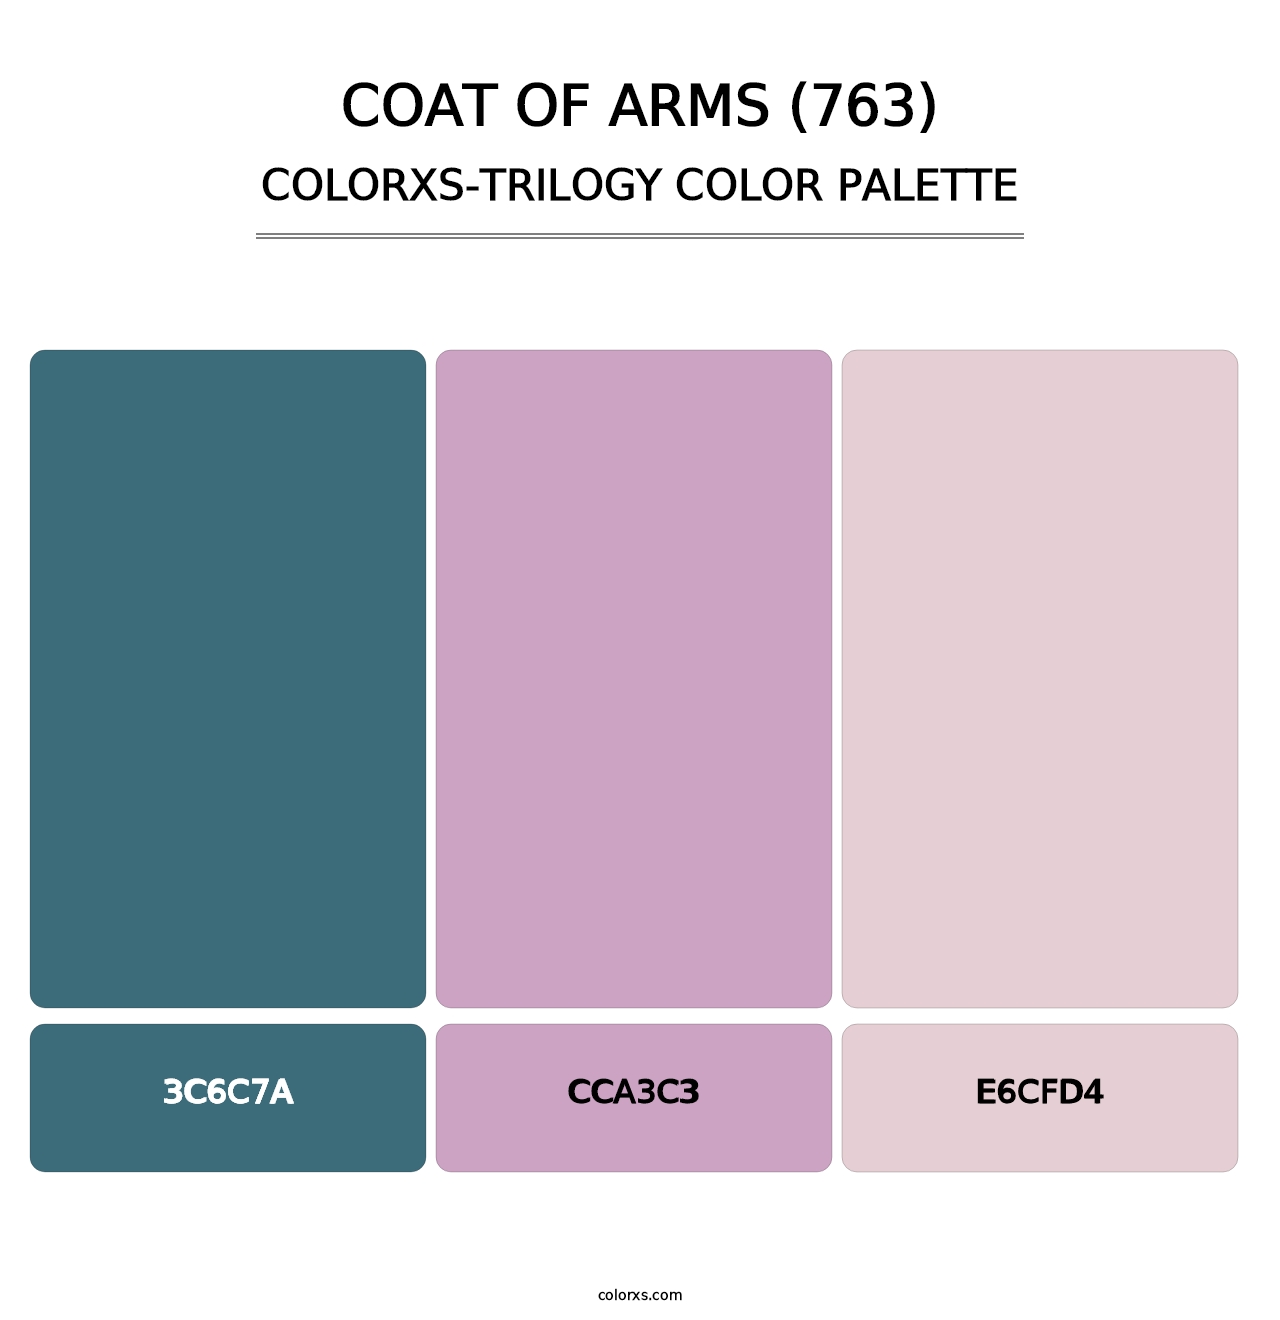 Coat of Arms (763) - Colorxs Trilogy Palette